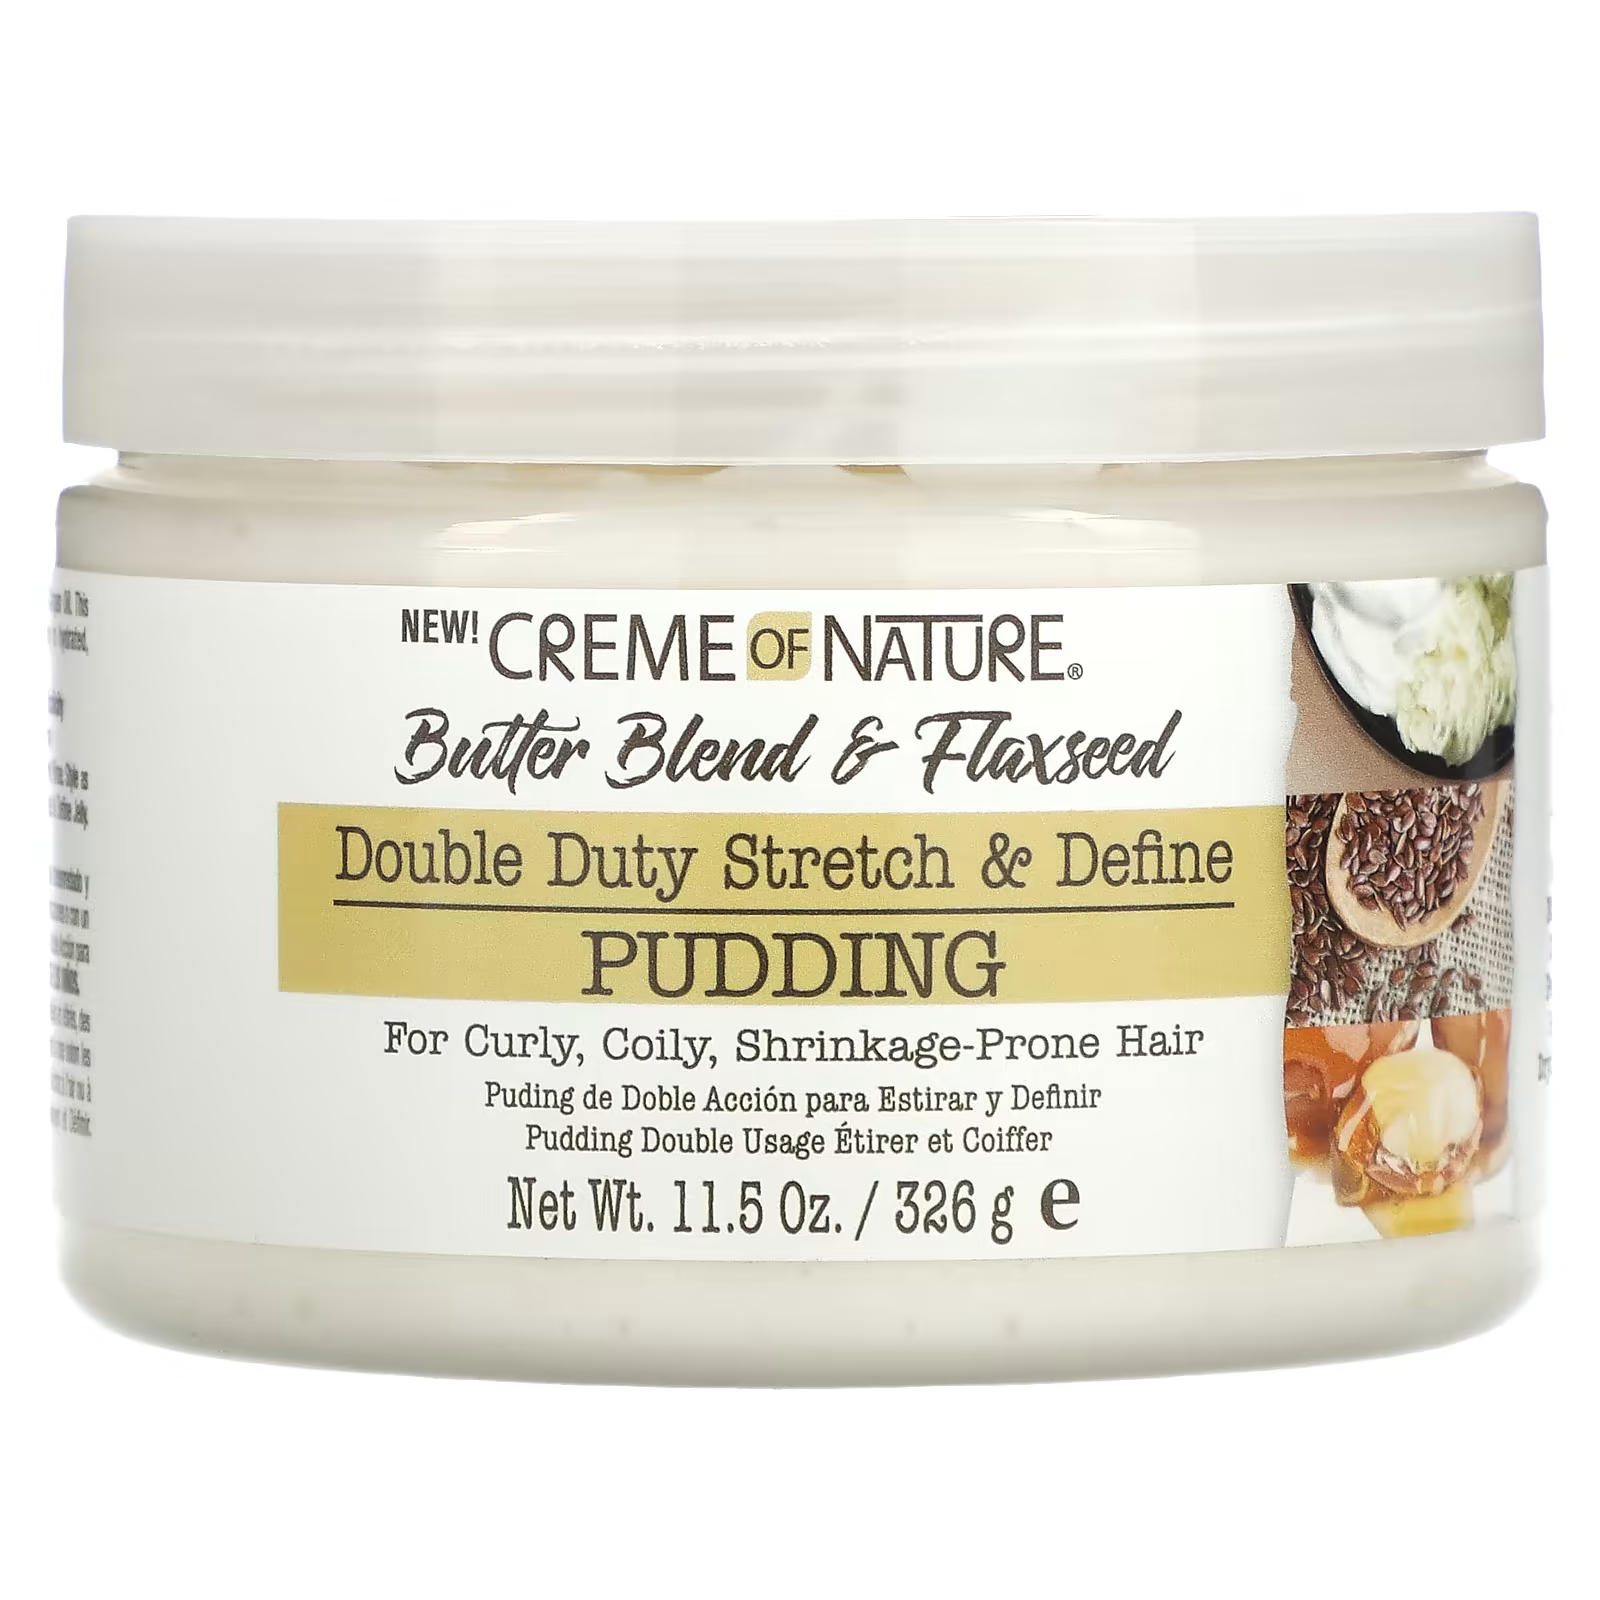 Смесь сливочного масла и льняного семени Creme Of Nature Double Duty Stretch & Define Pudding, 326 г creme of nature clay